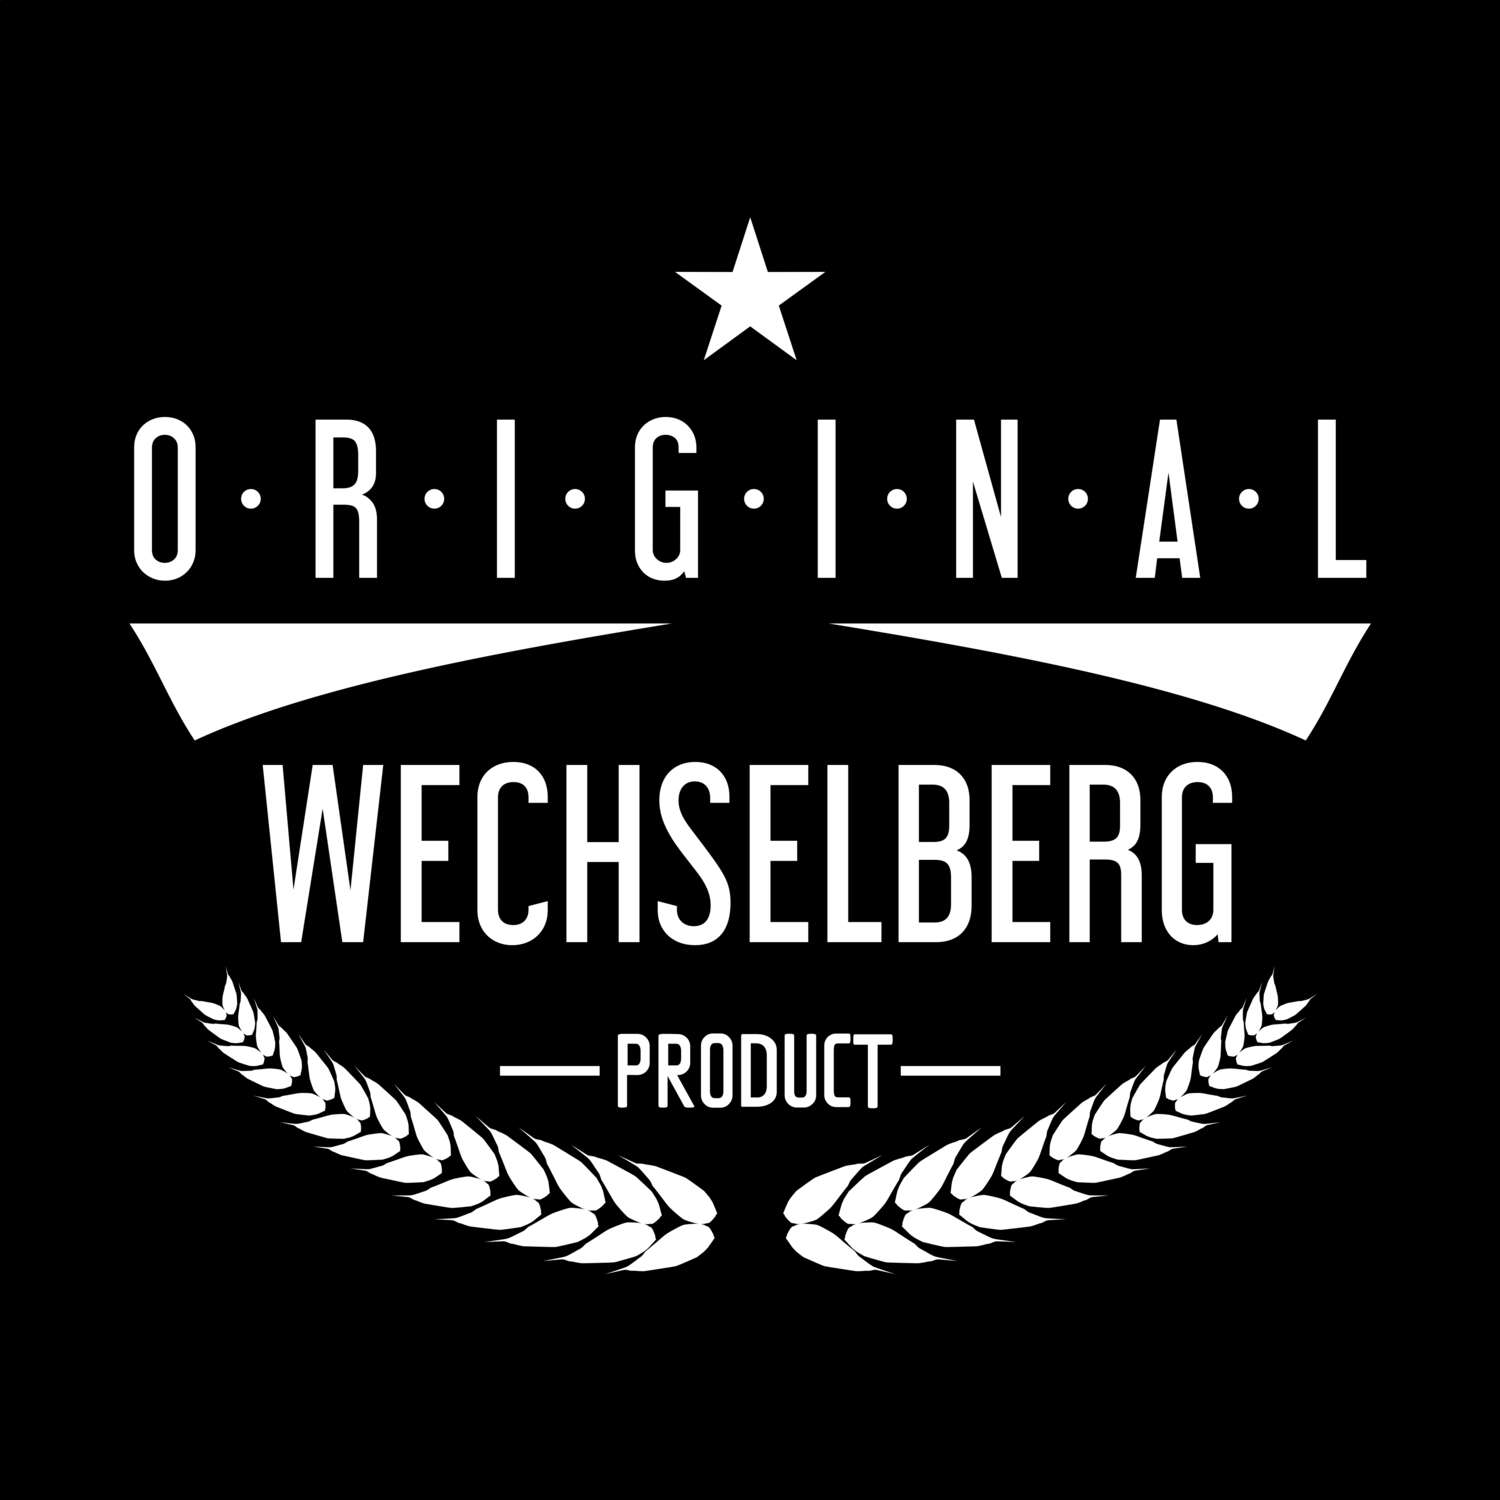 Wechselberg T-Shirt »Original Product«